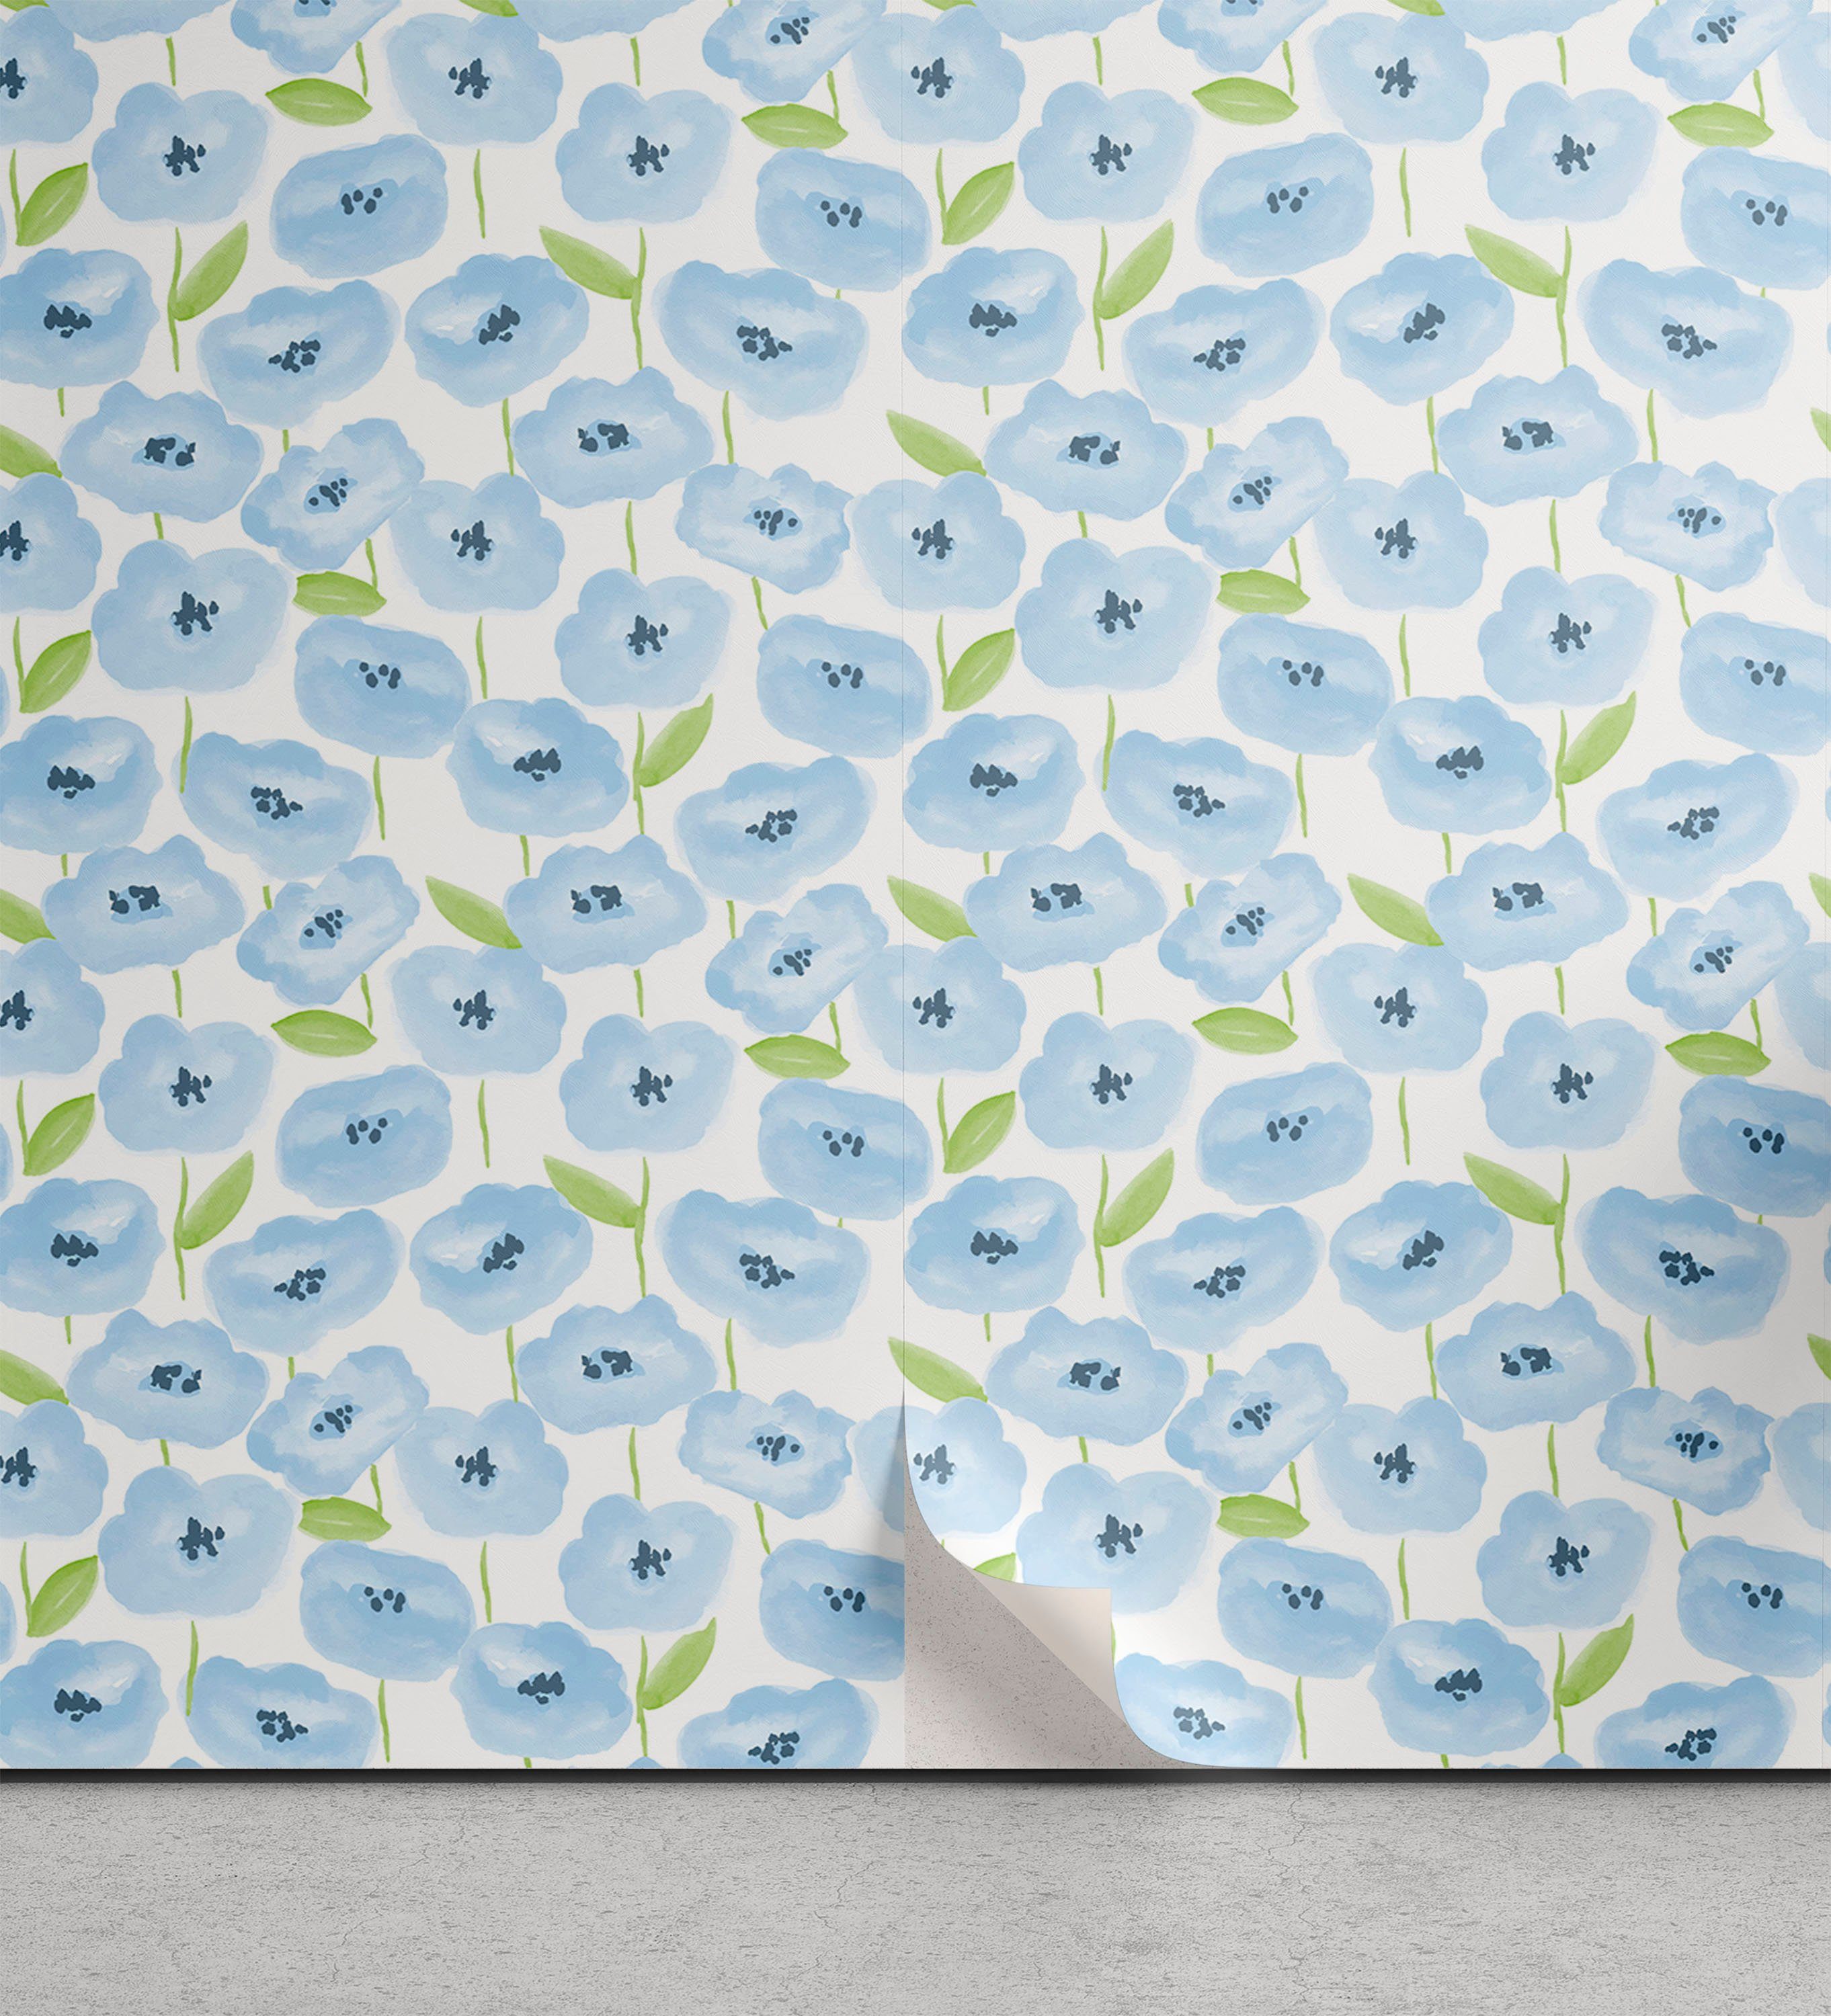 Abakuhaus Vinyltapete selbstklebendes Wohnzimmer Küchenakzent, Blume Botanischer Frühling Vibe